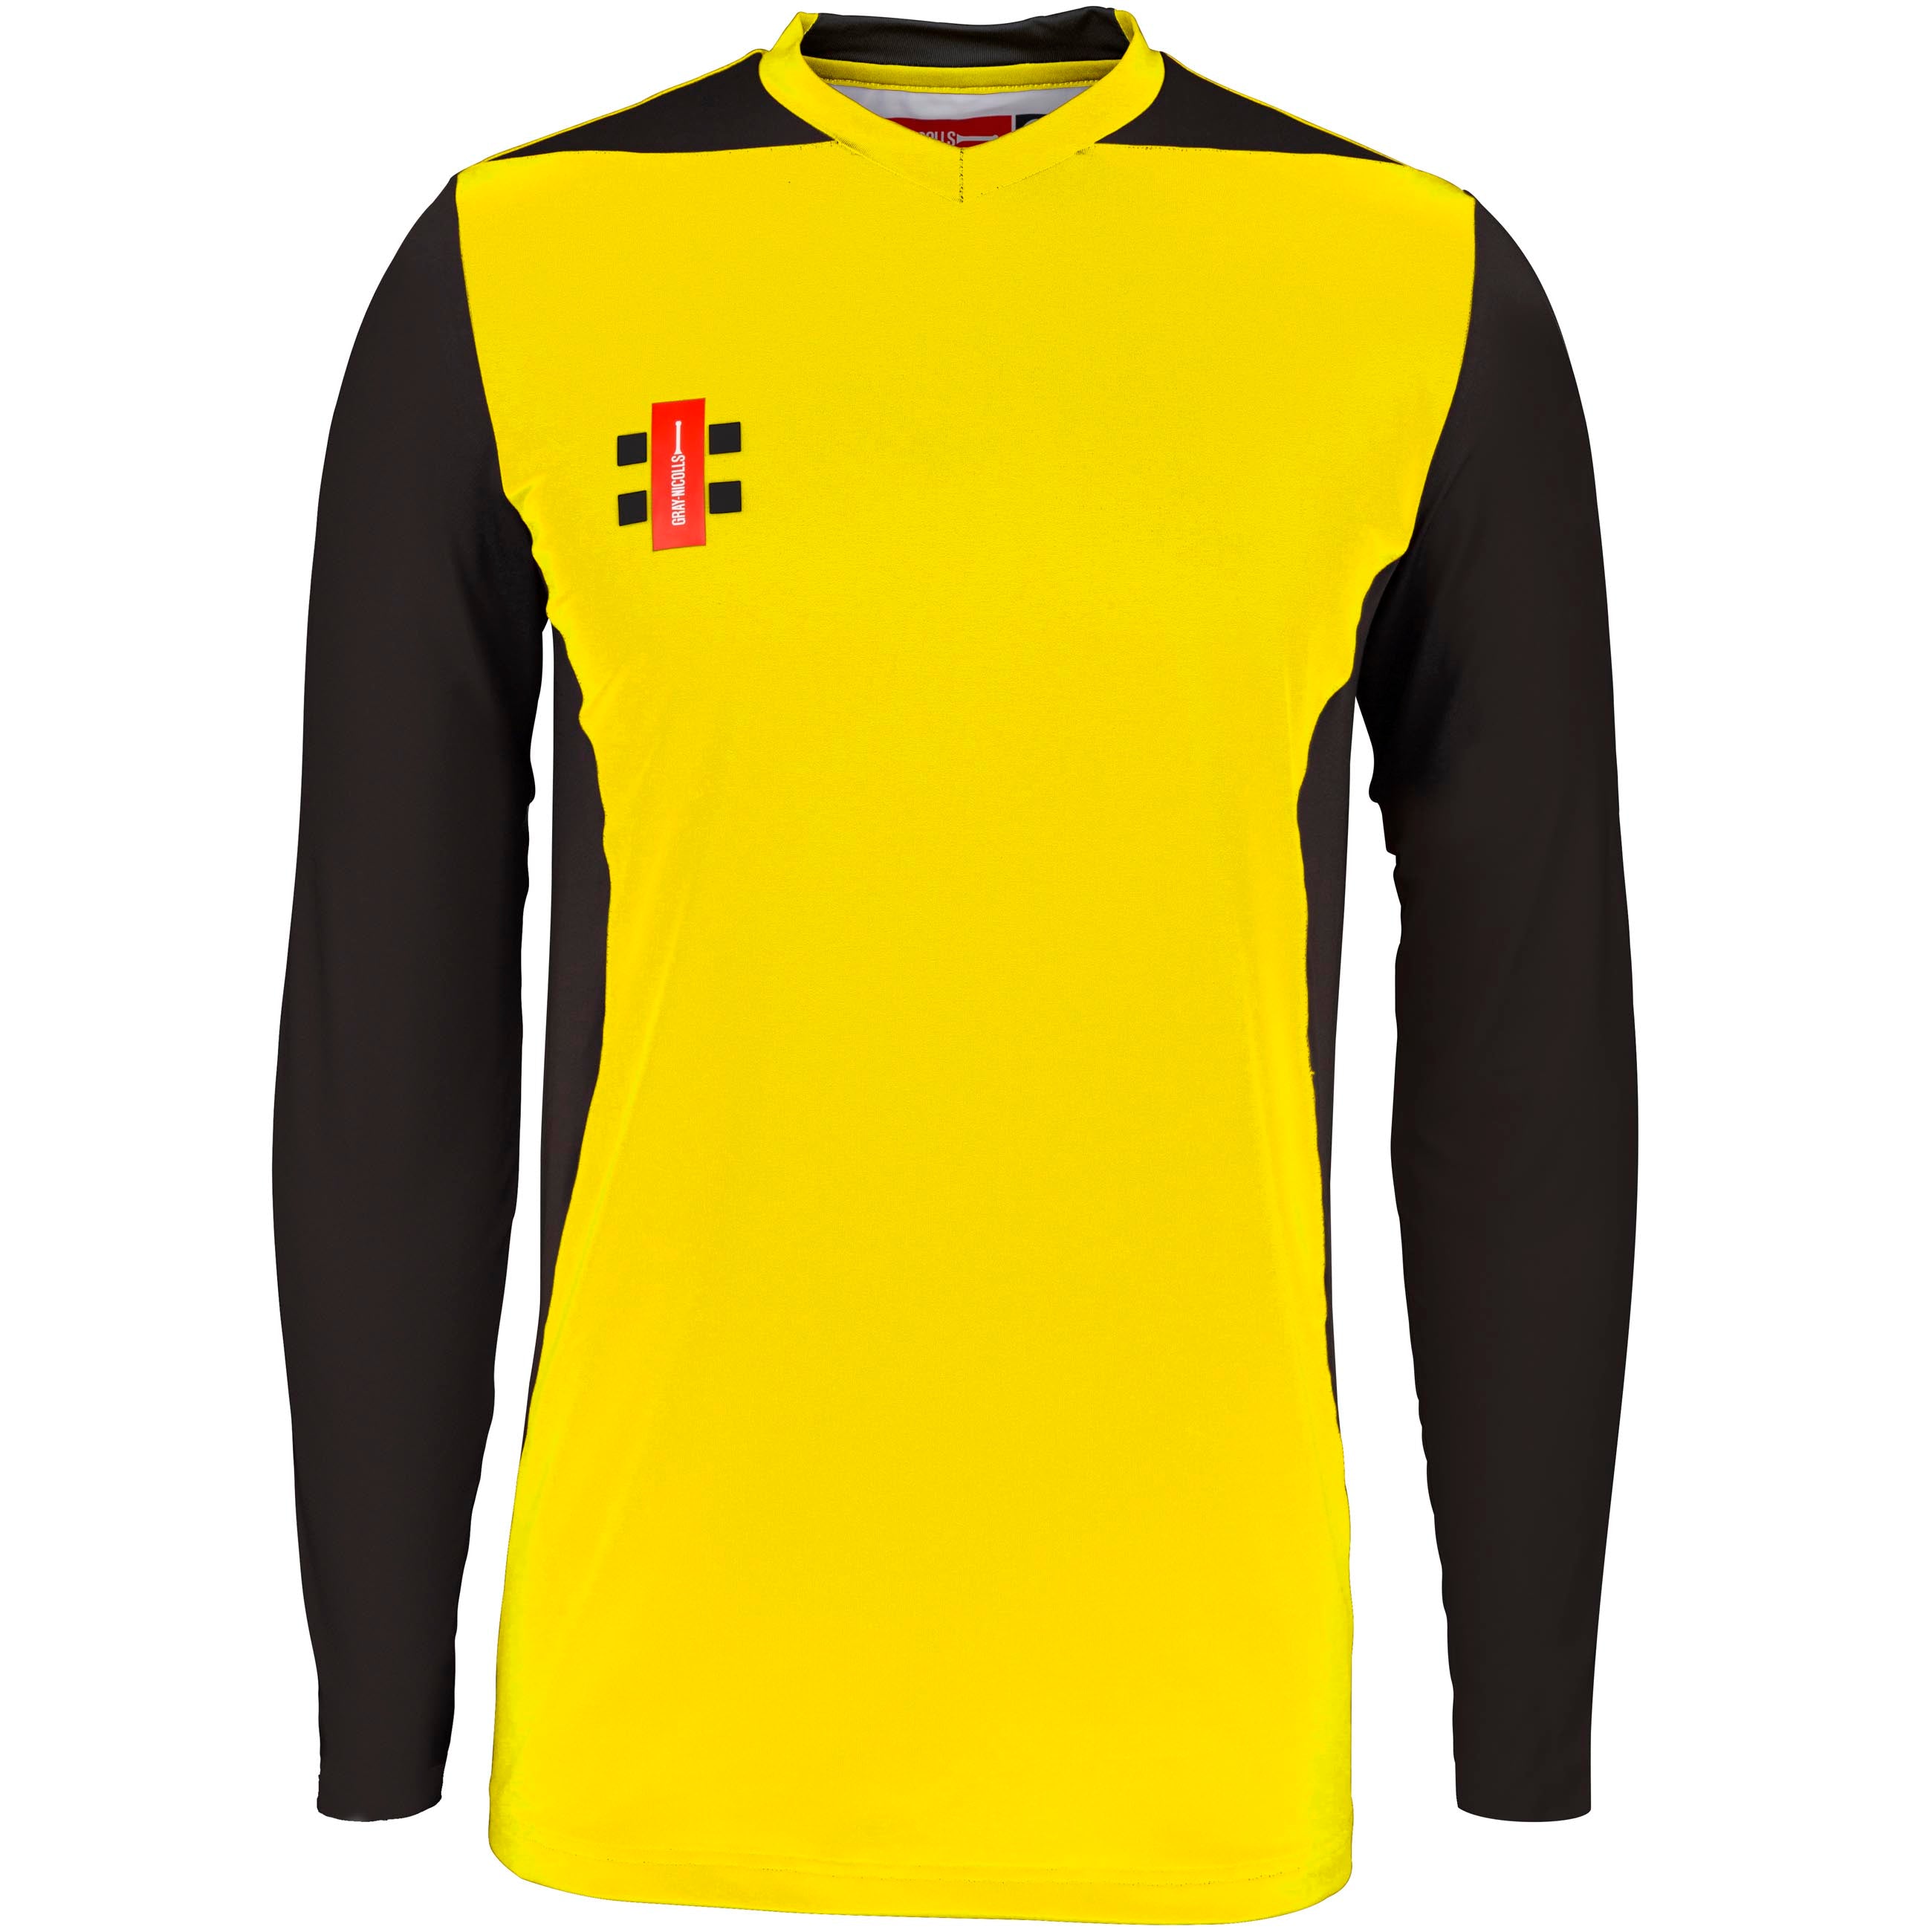 2600 CCFD19 5030705 Shirt T20 Long Sleeve Yellow & Black, Front